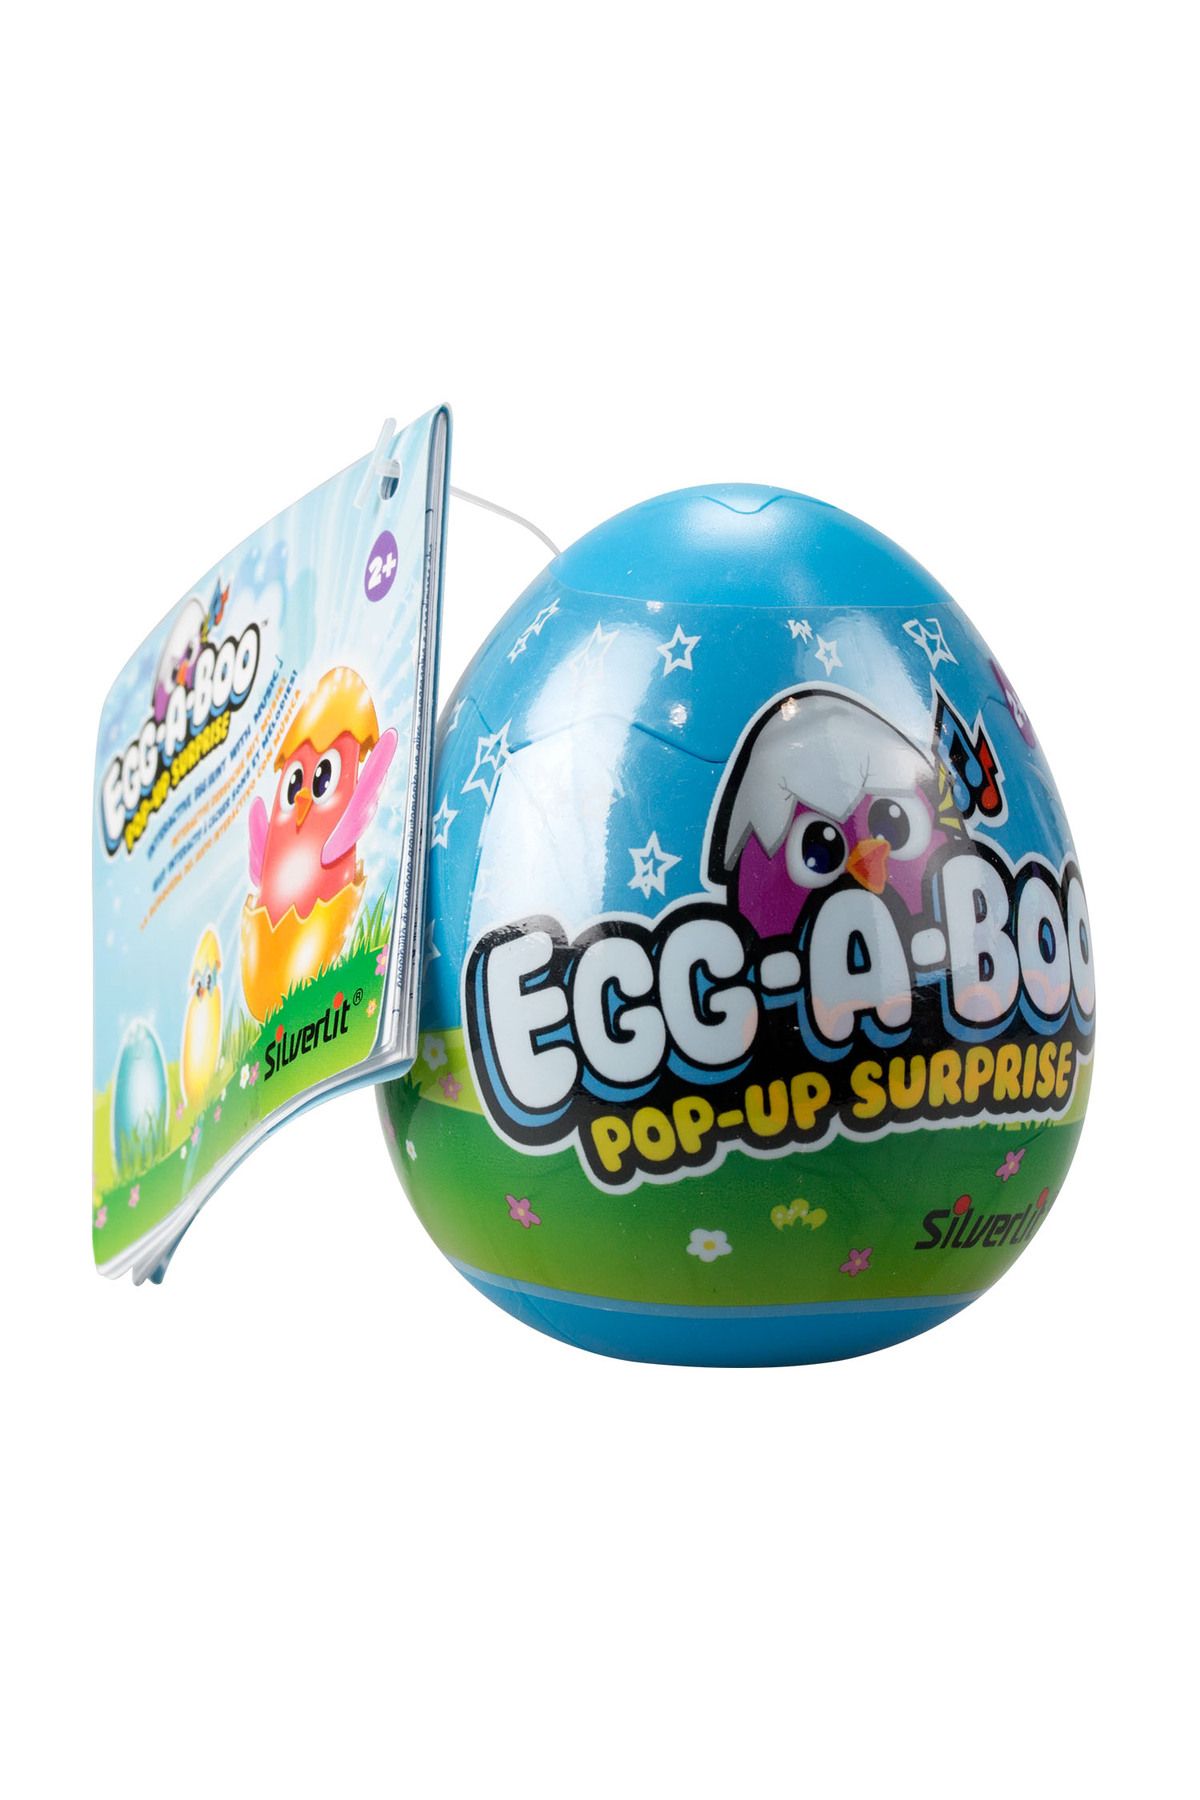 Silverlit Egg-a-boo Tekli Sürpriz Paket 89595